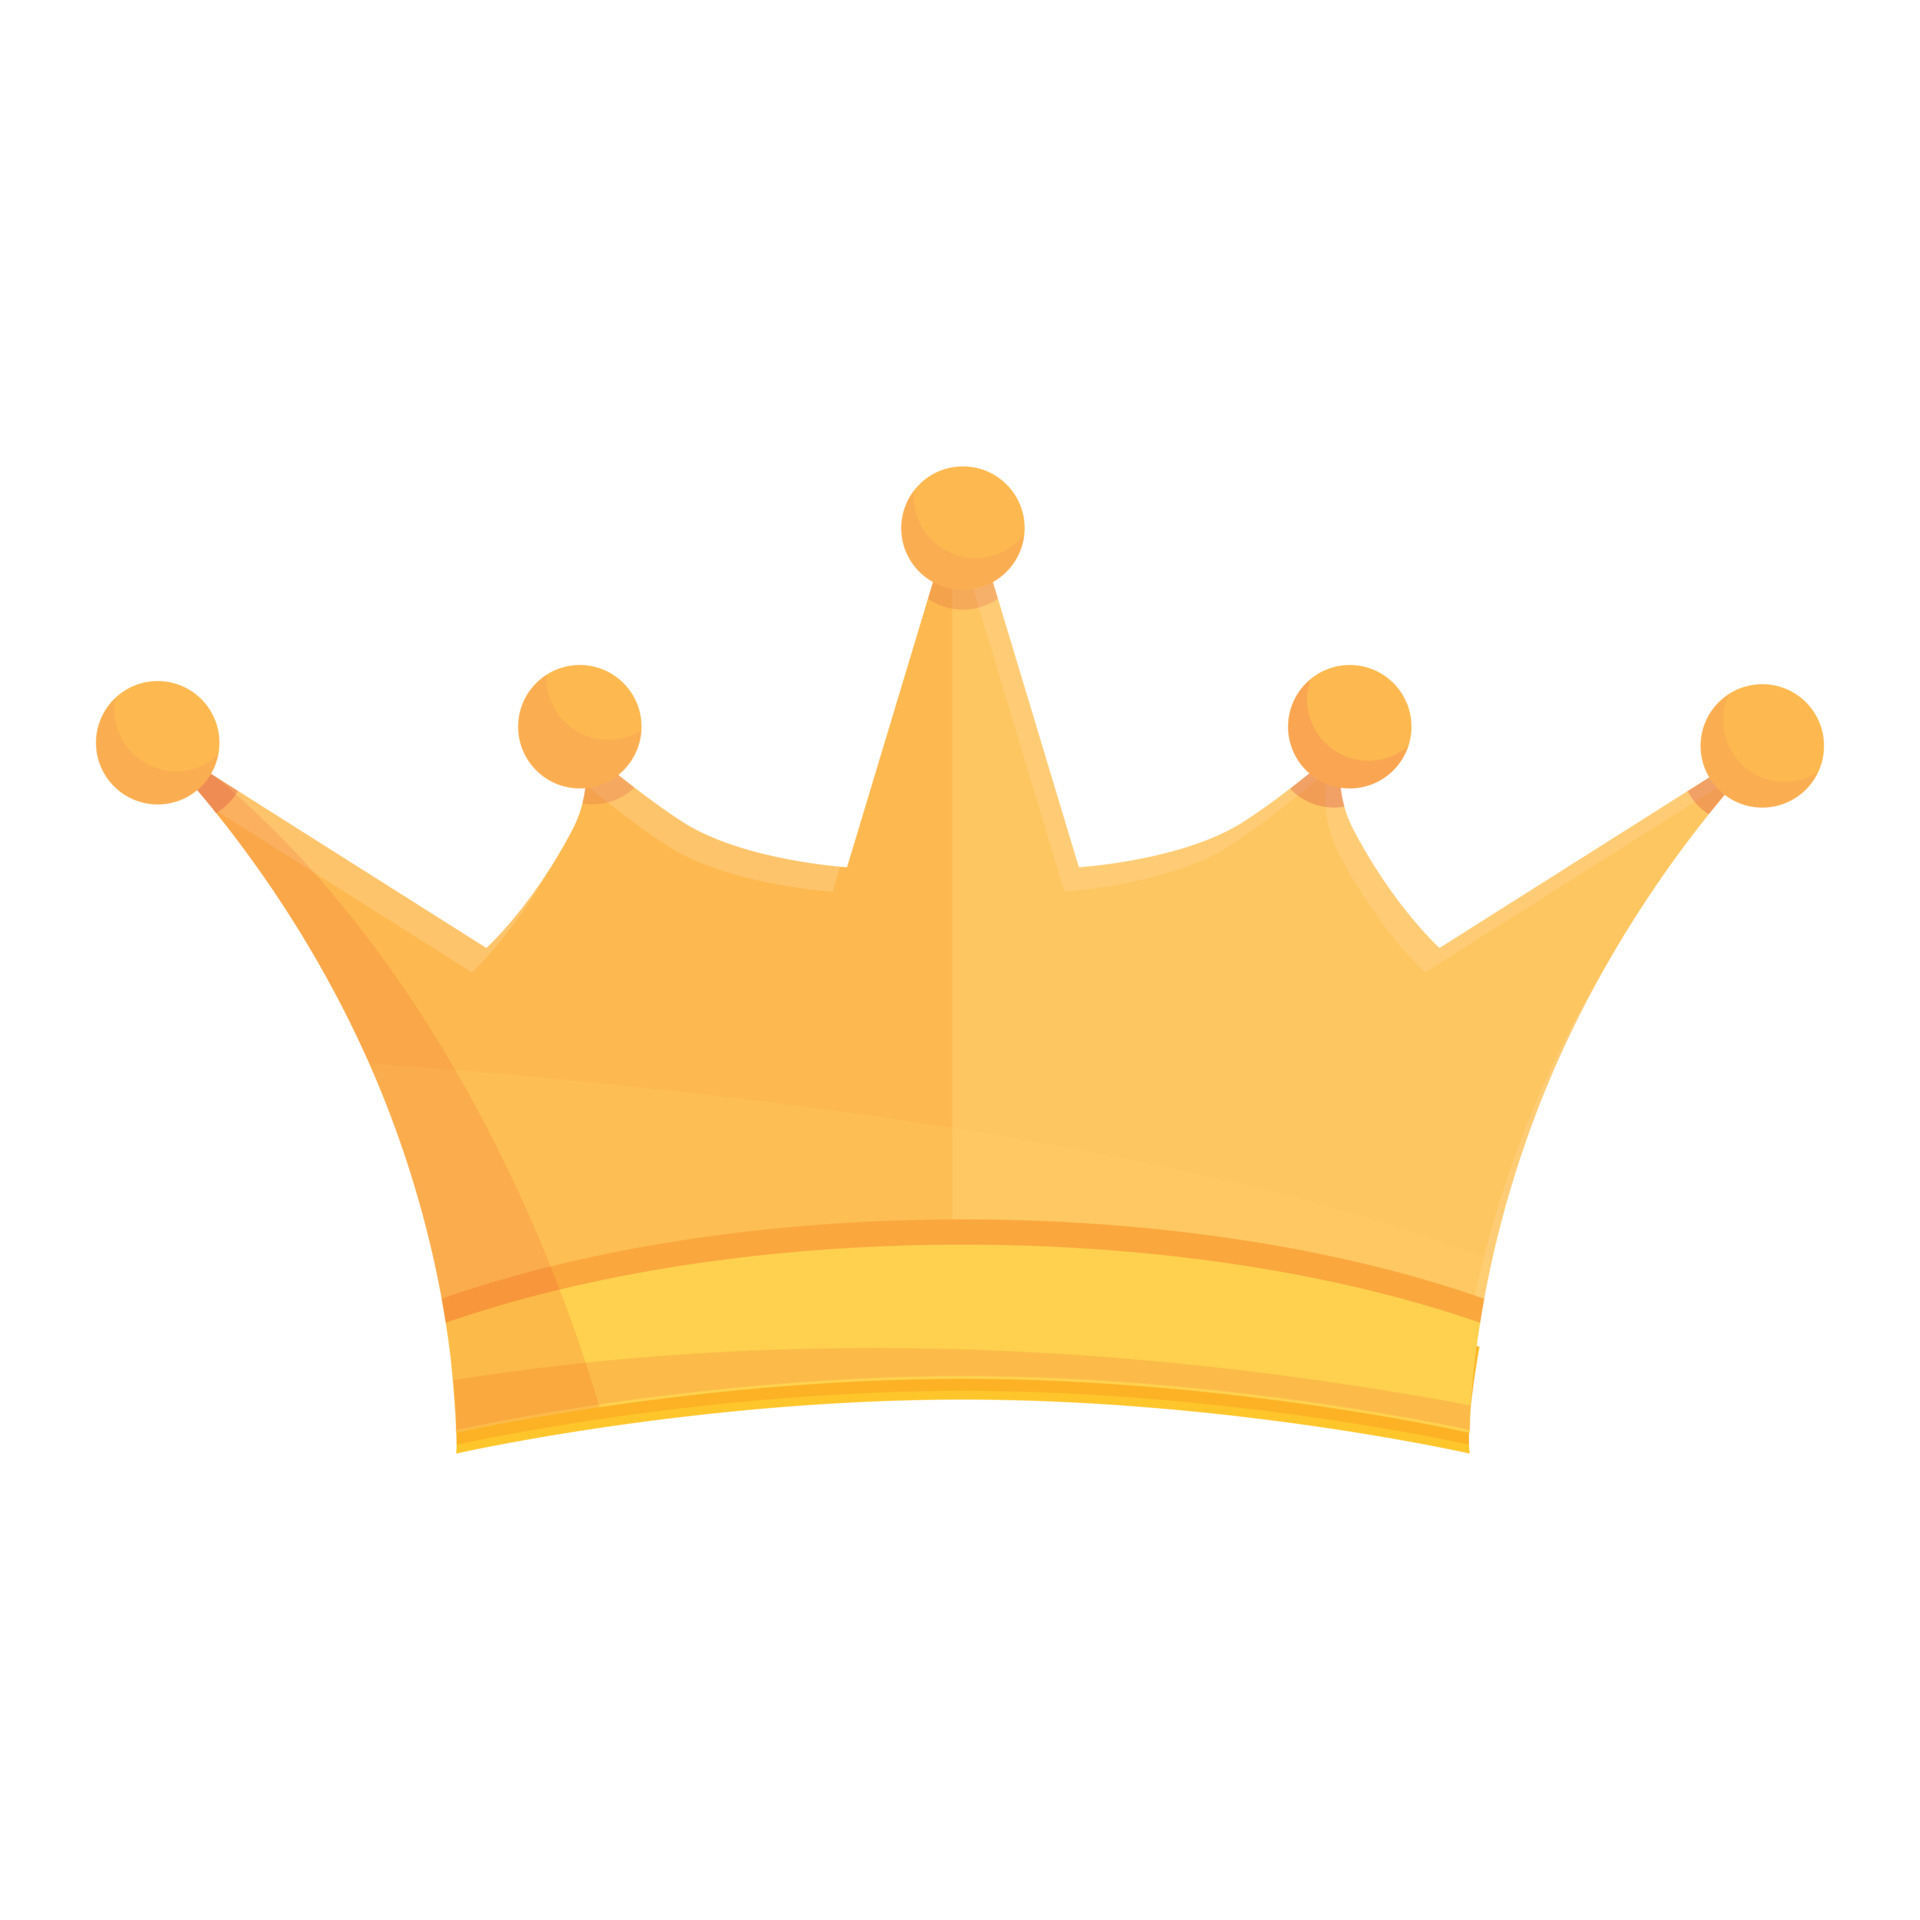 King crown icon cartoon vector. Gold royal crown 14307754 Vector Art at  Vecteezy